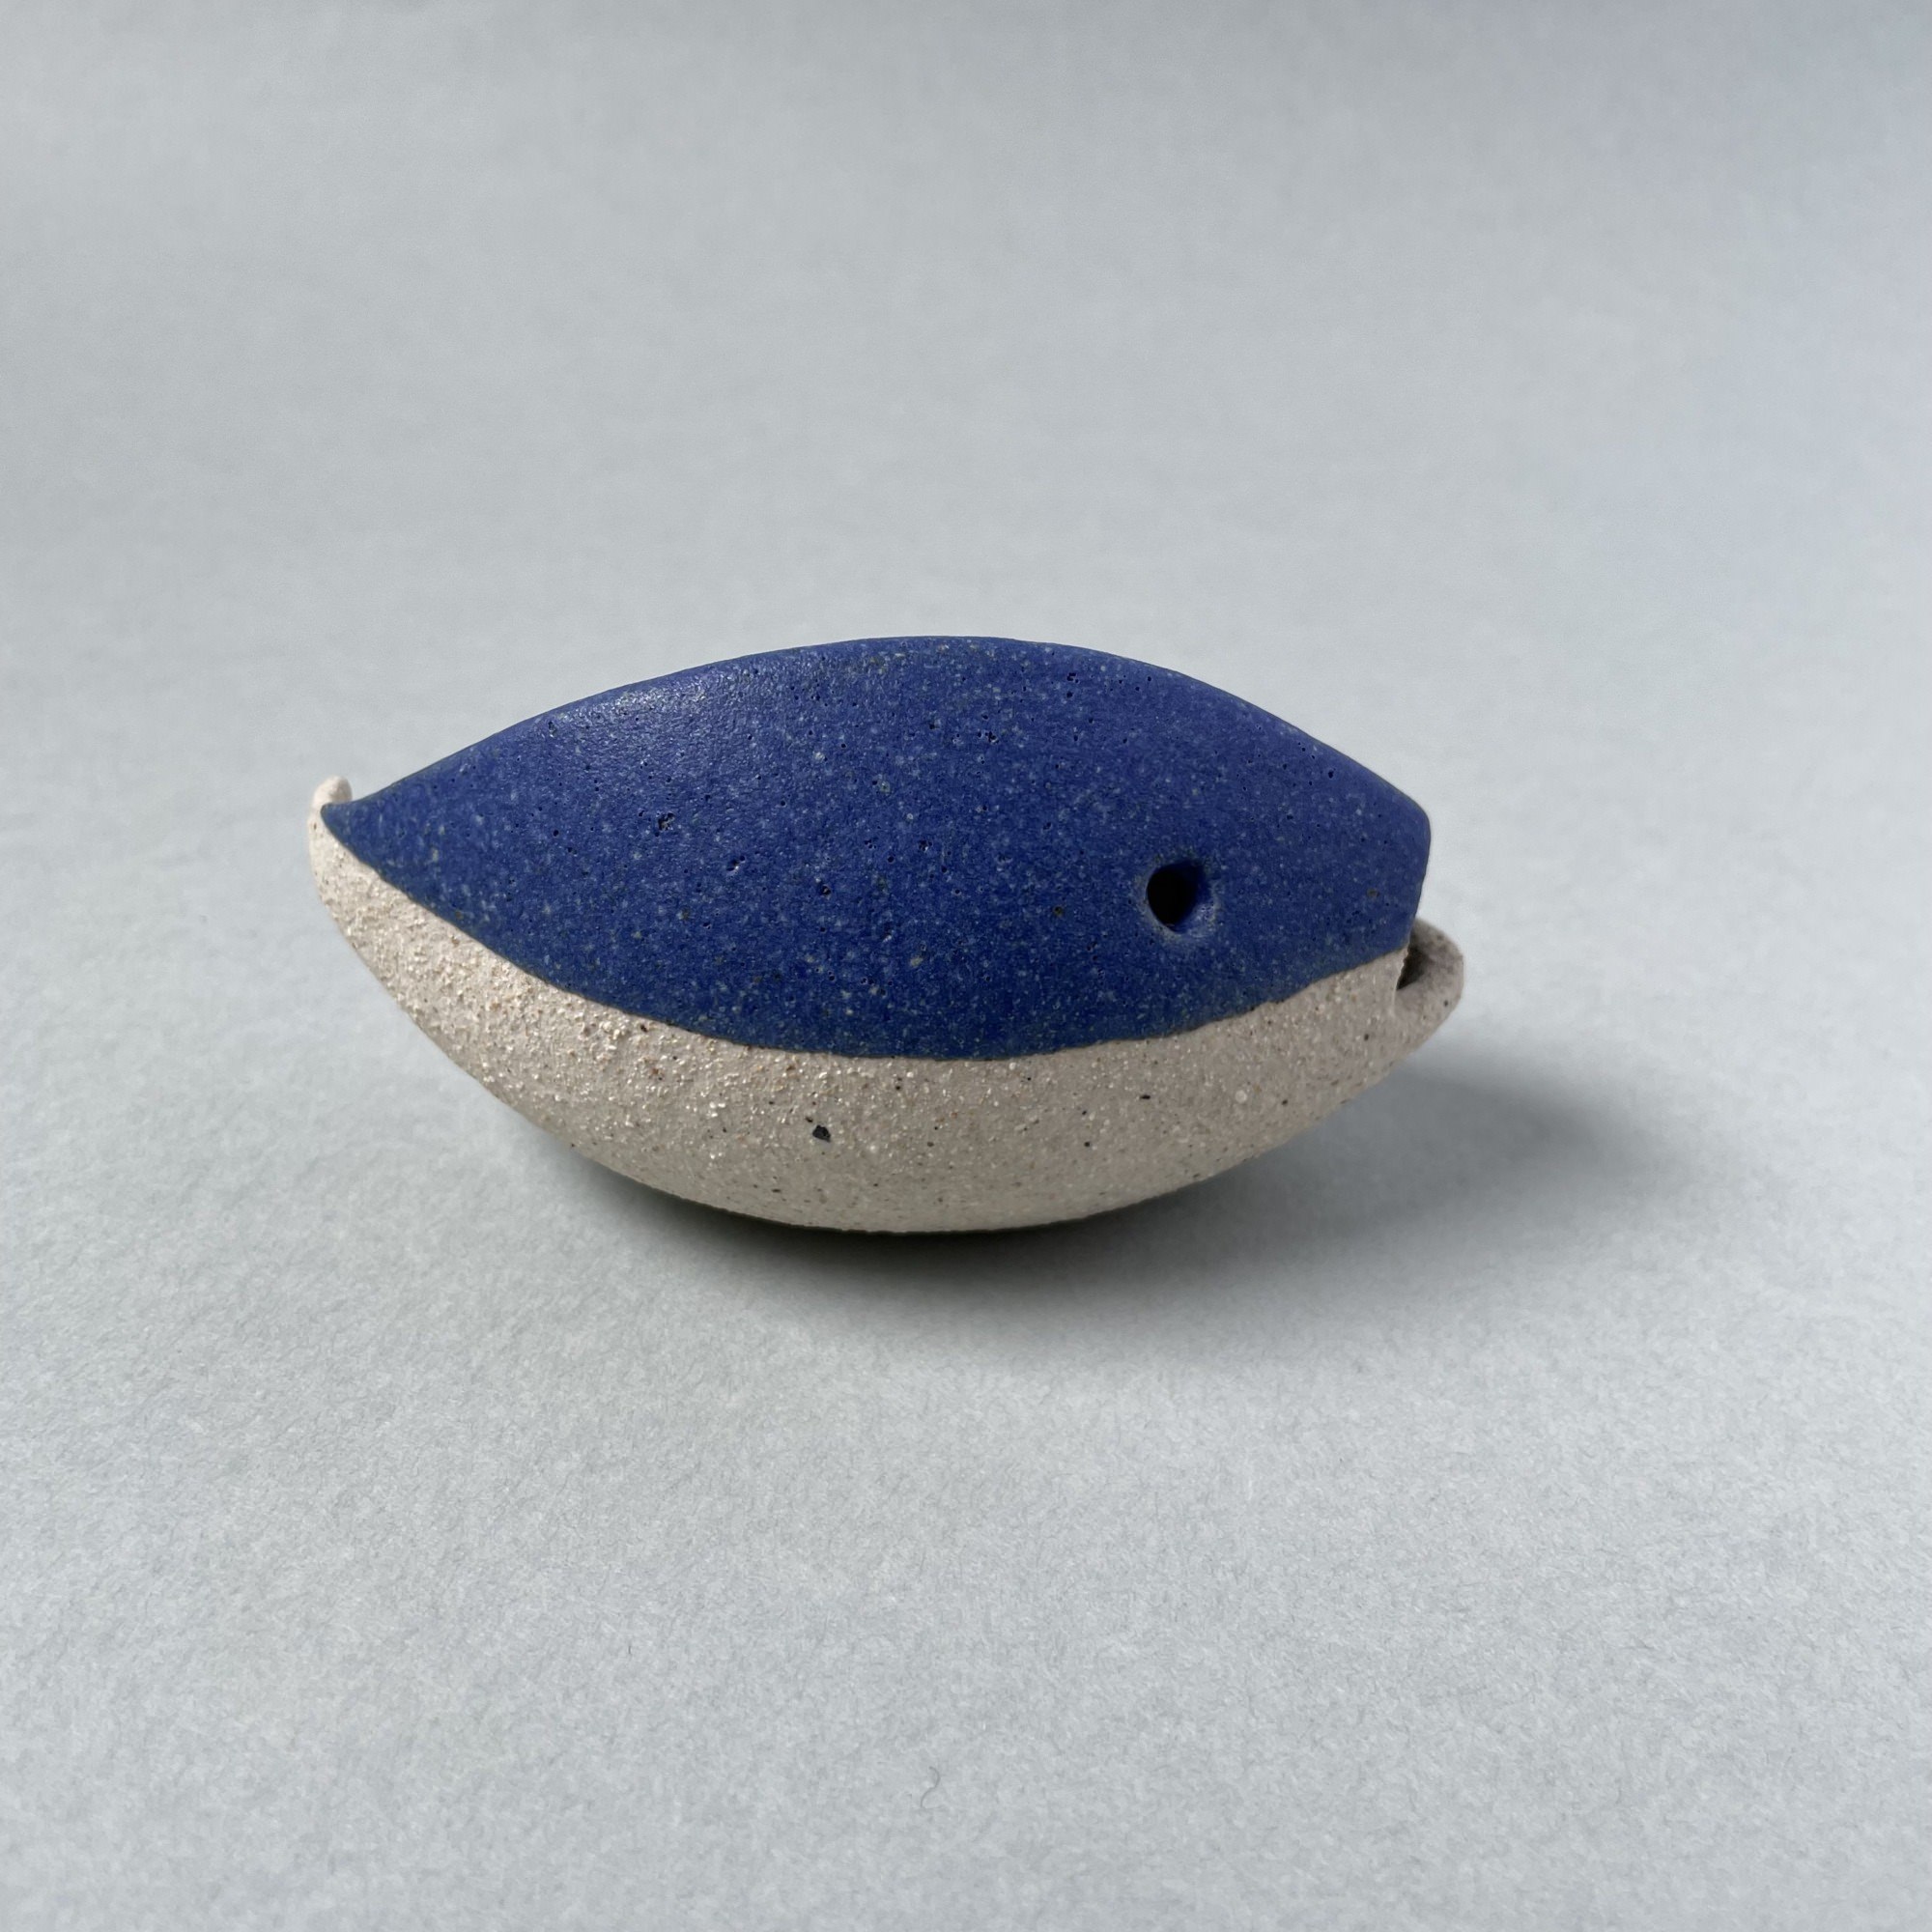 Guido De Zan Fish Object M Blue